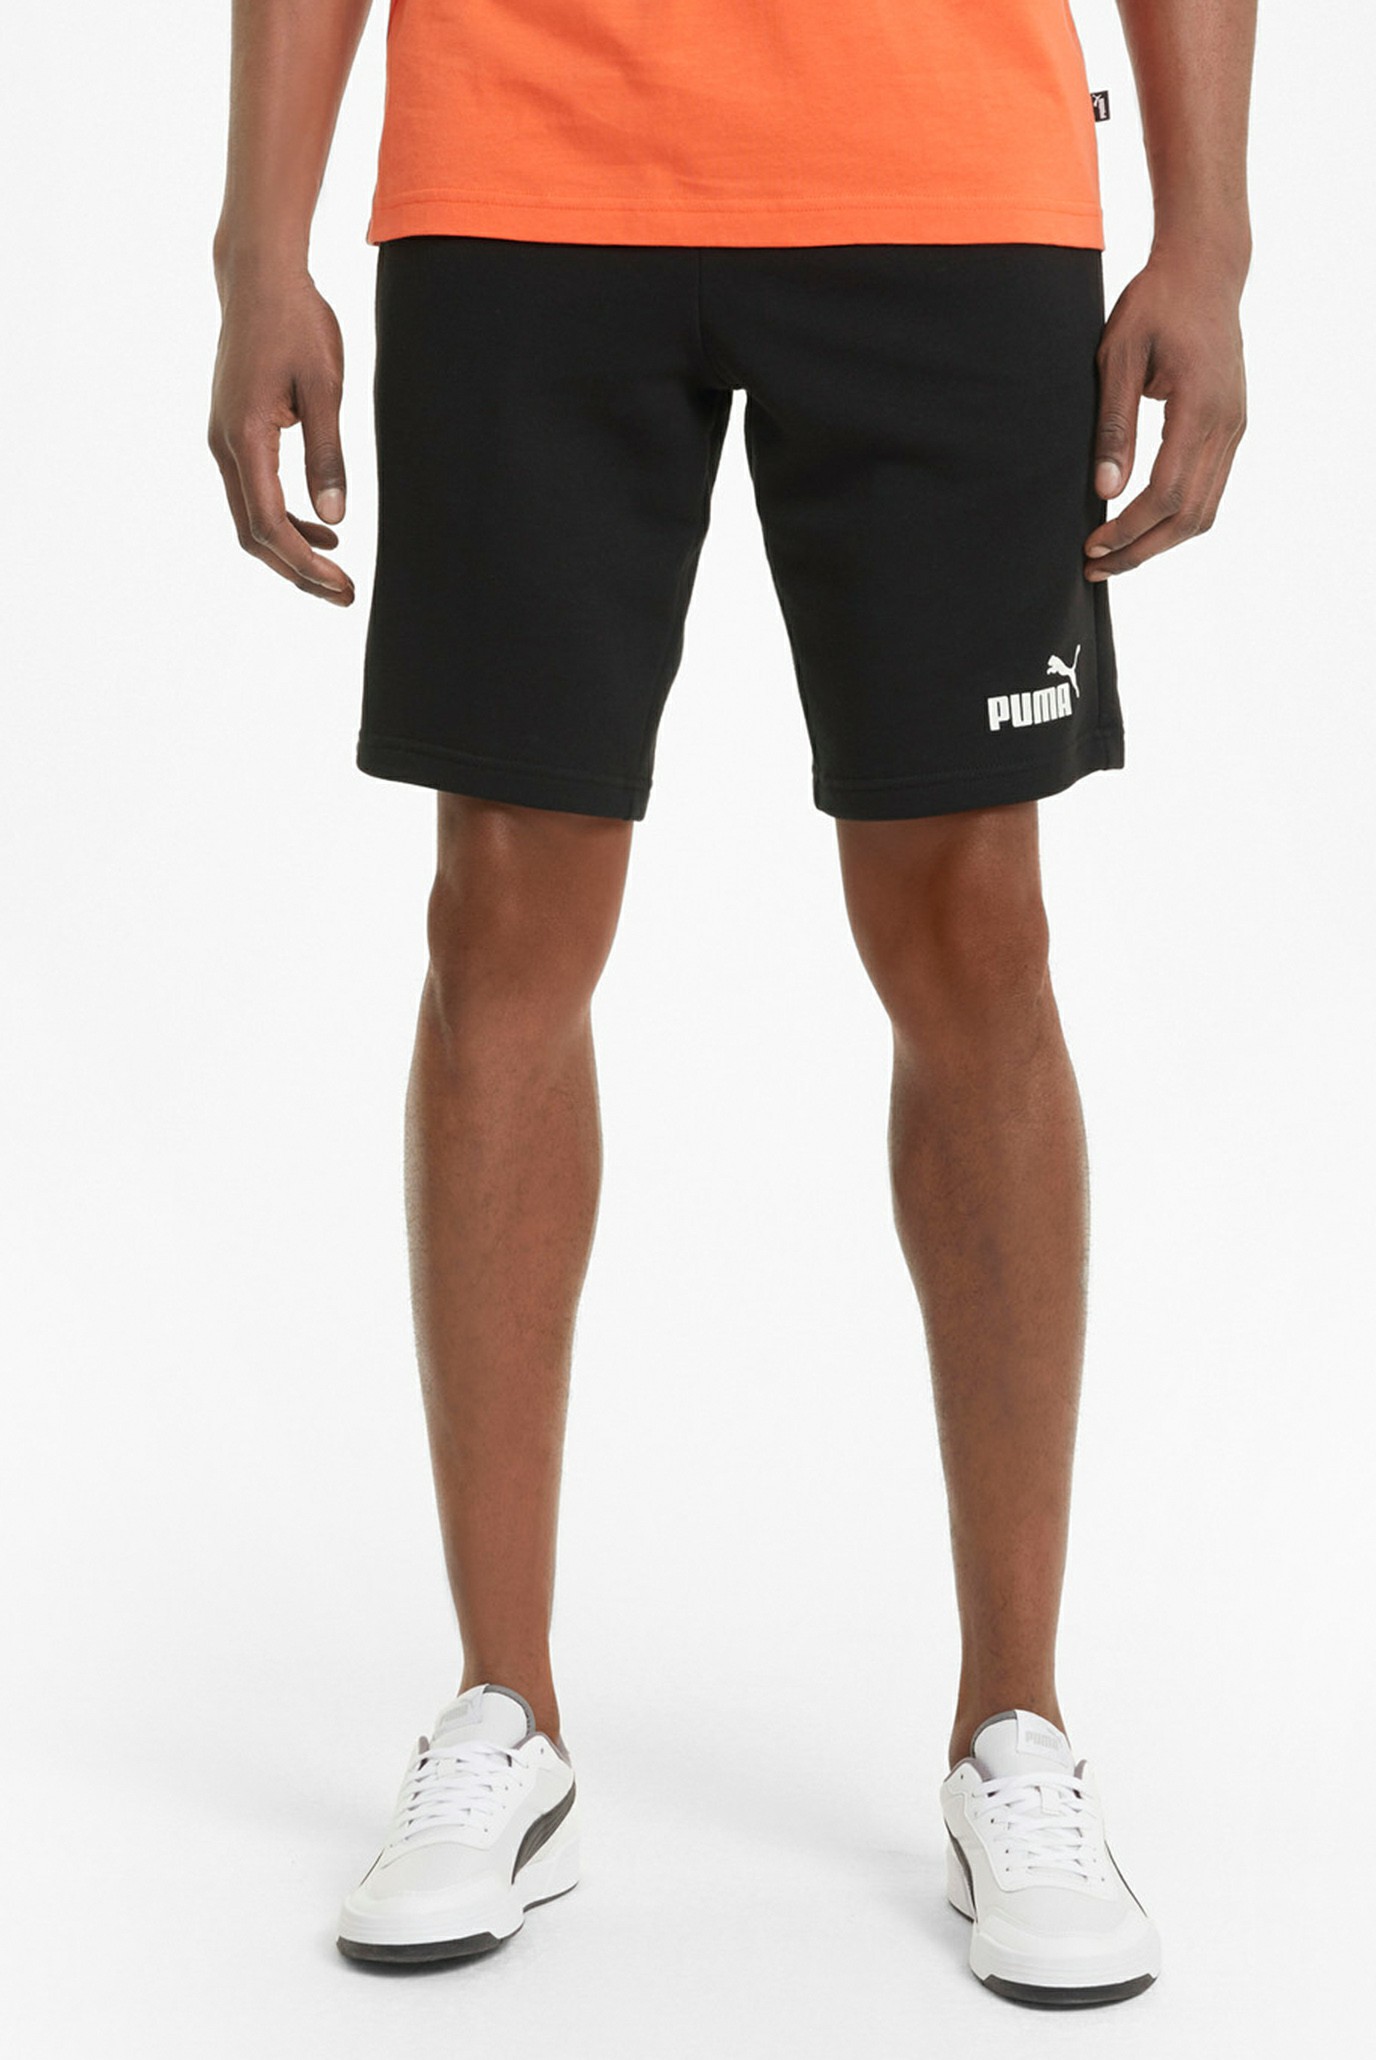 Чоловічі чорні шорти Essentials Men's Shorts 1